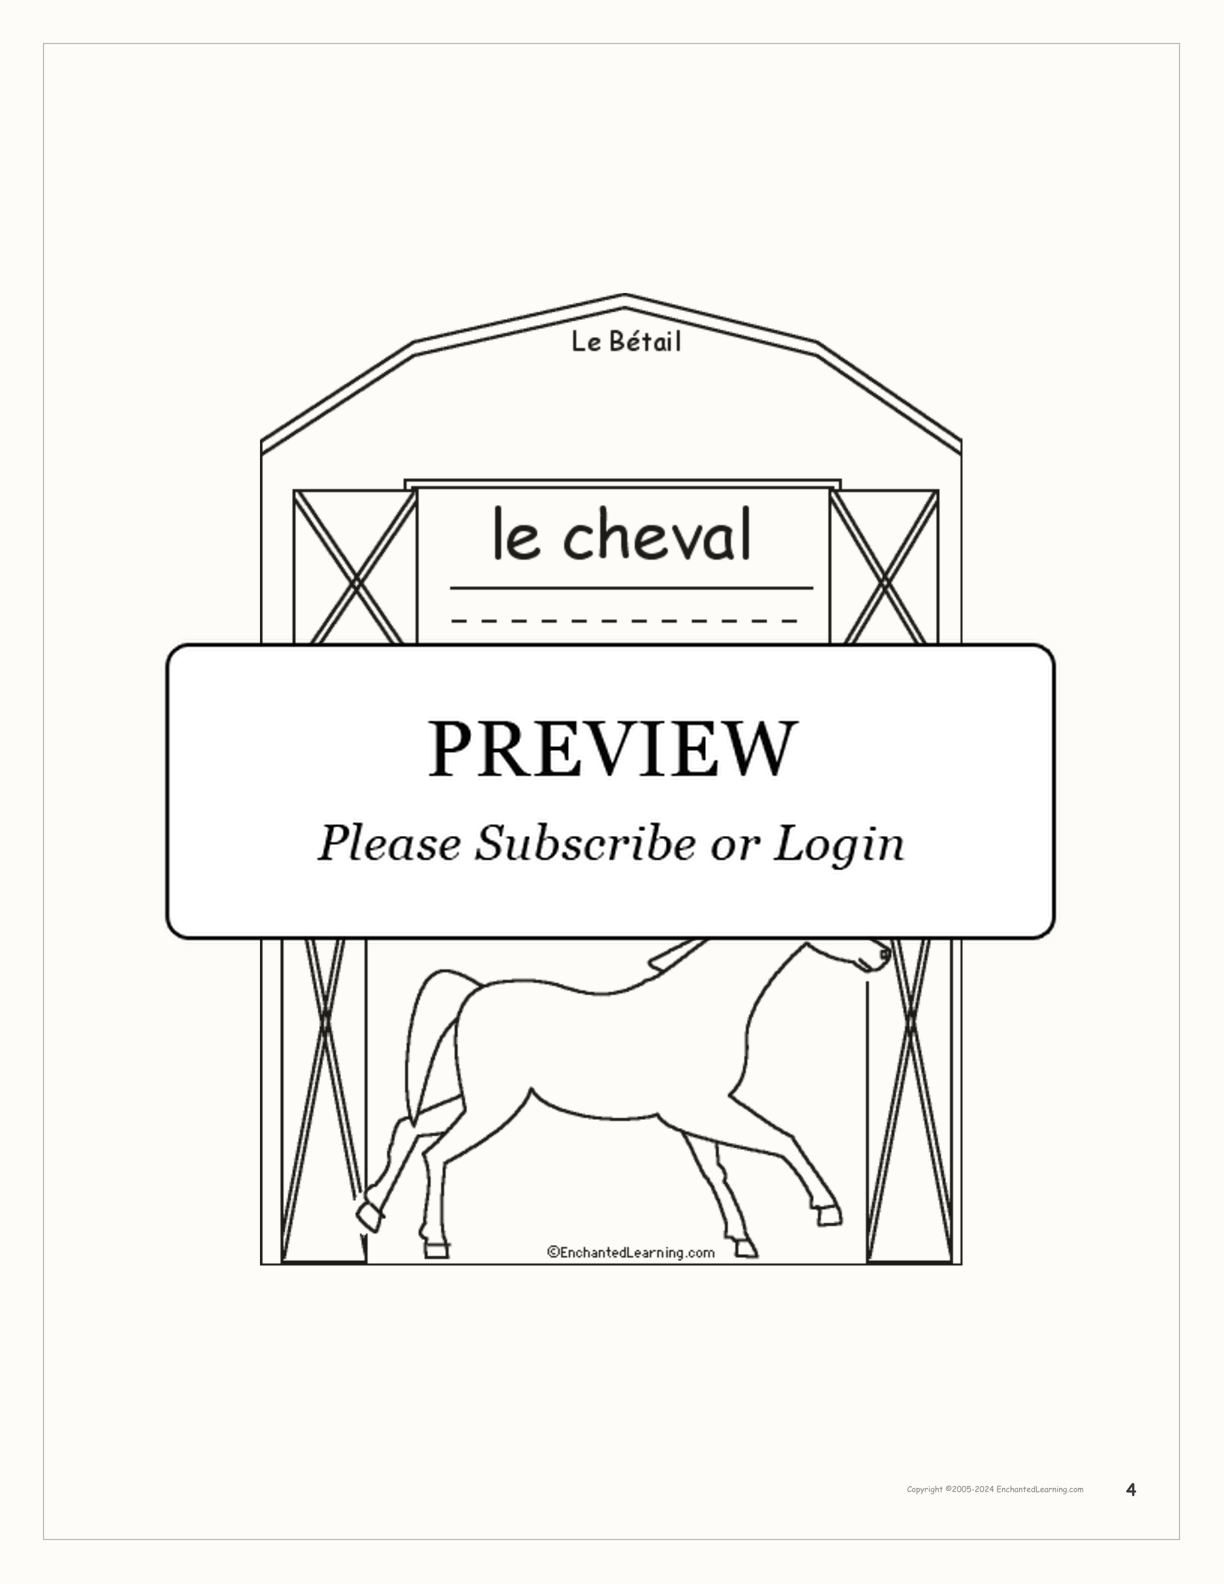 Bétail (Livestock) interactive printout page 4